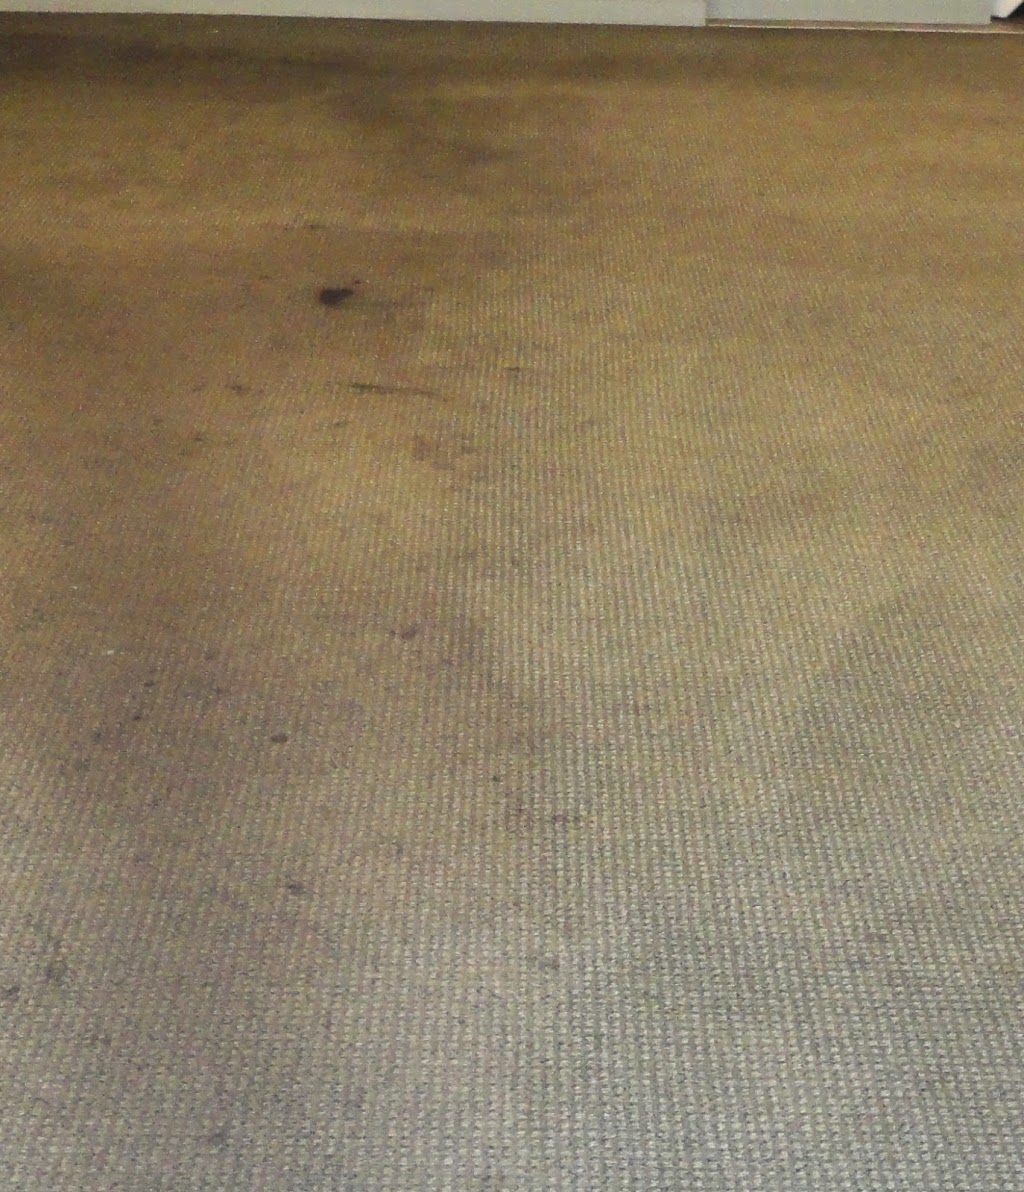 AMS Carpet Cleaning, LLC | 590 Albion Rd, Edgerton, WI 53534 | Phone: (920) 723-1188